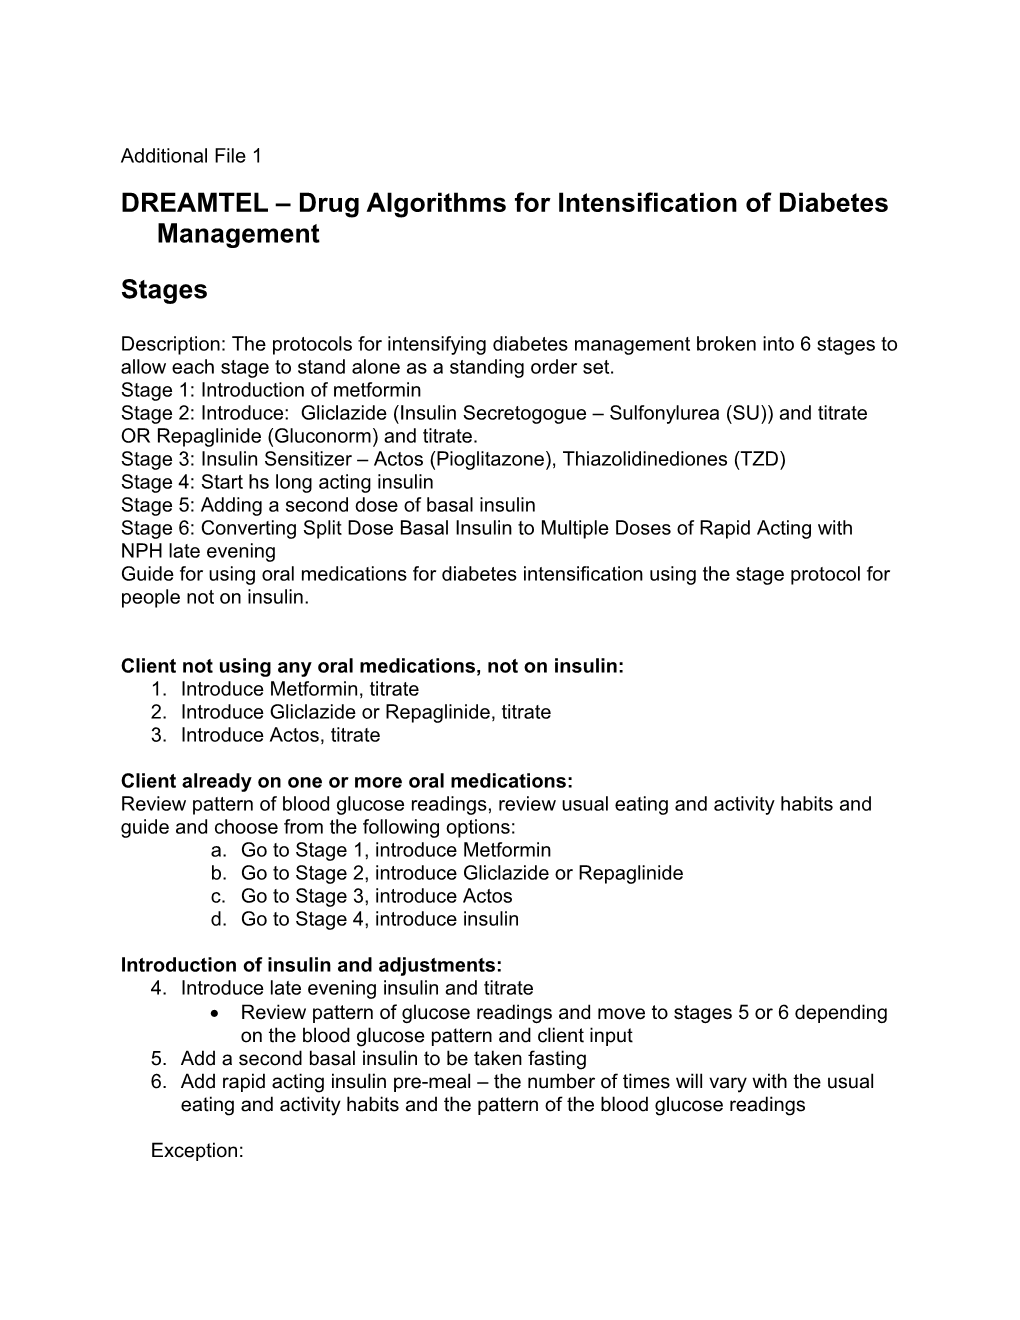 DREAMTEL Drug Algorithms for Intensification of Diabetes Management